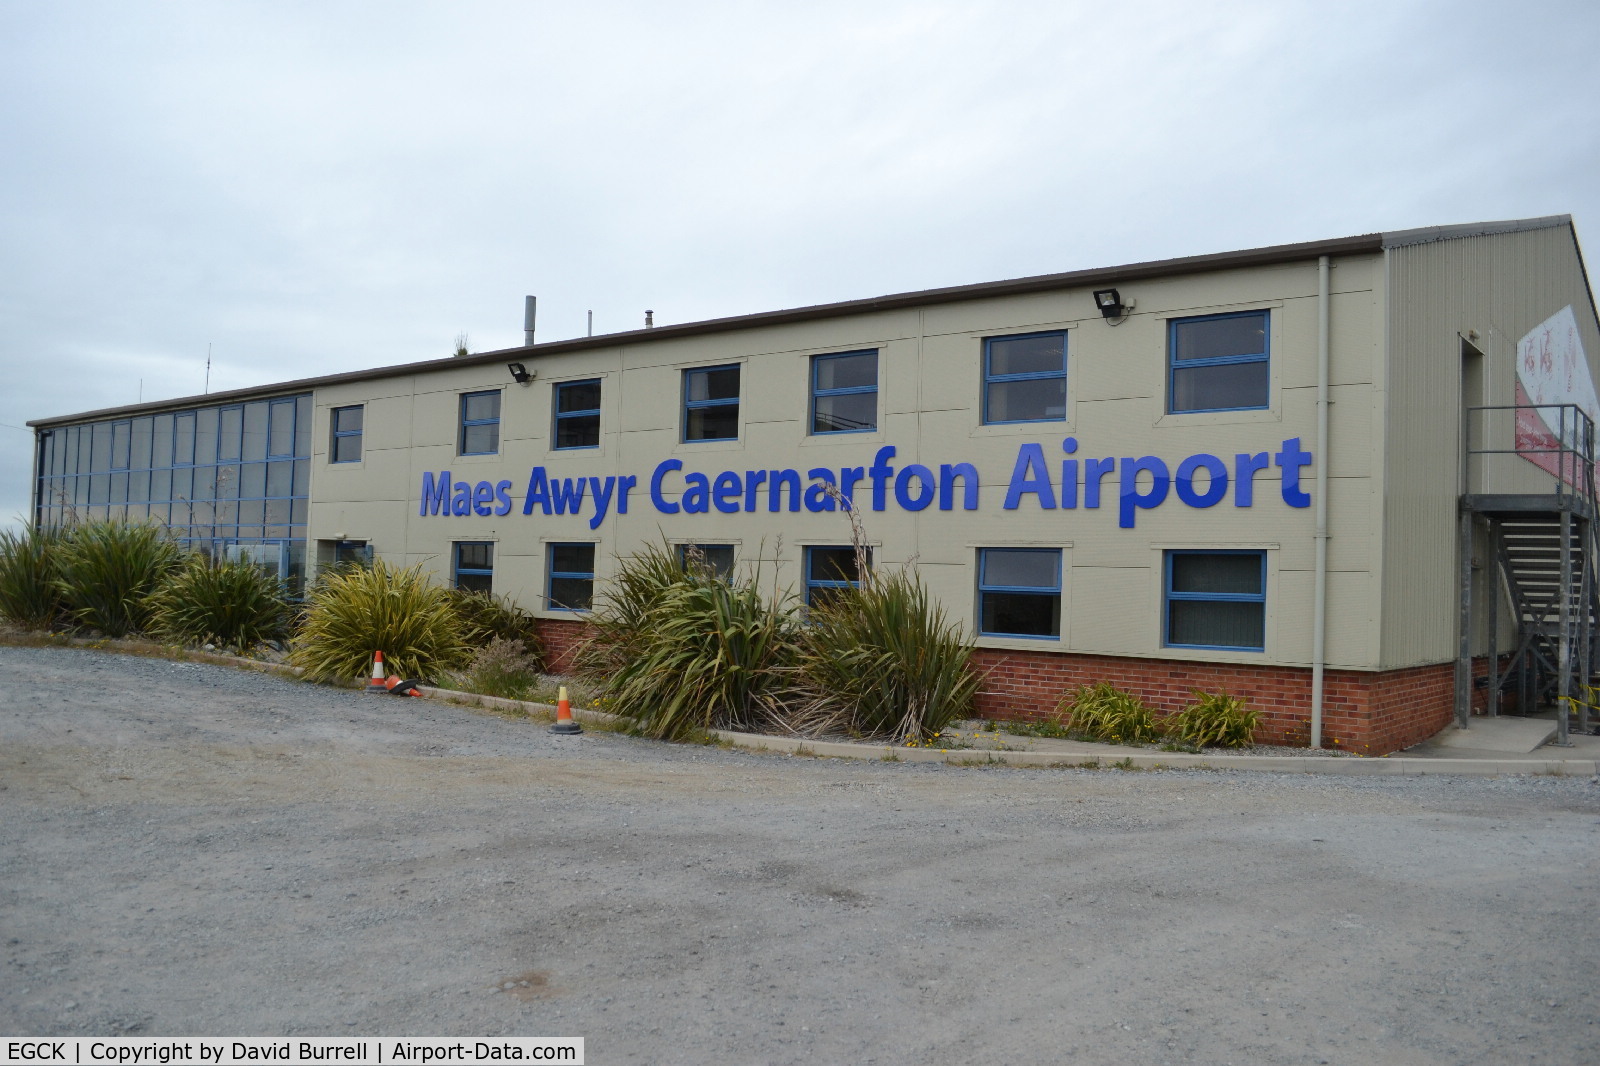 Caernarfon Airport, Caernarfon, Wales United Kingdom (EGCK) - Caernarfon Airport Terminal, Wales.